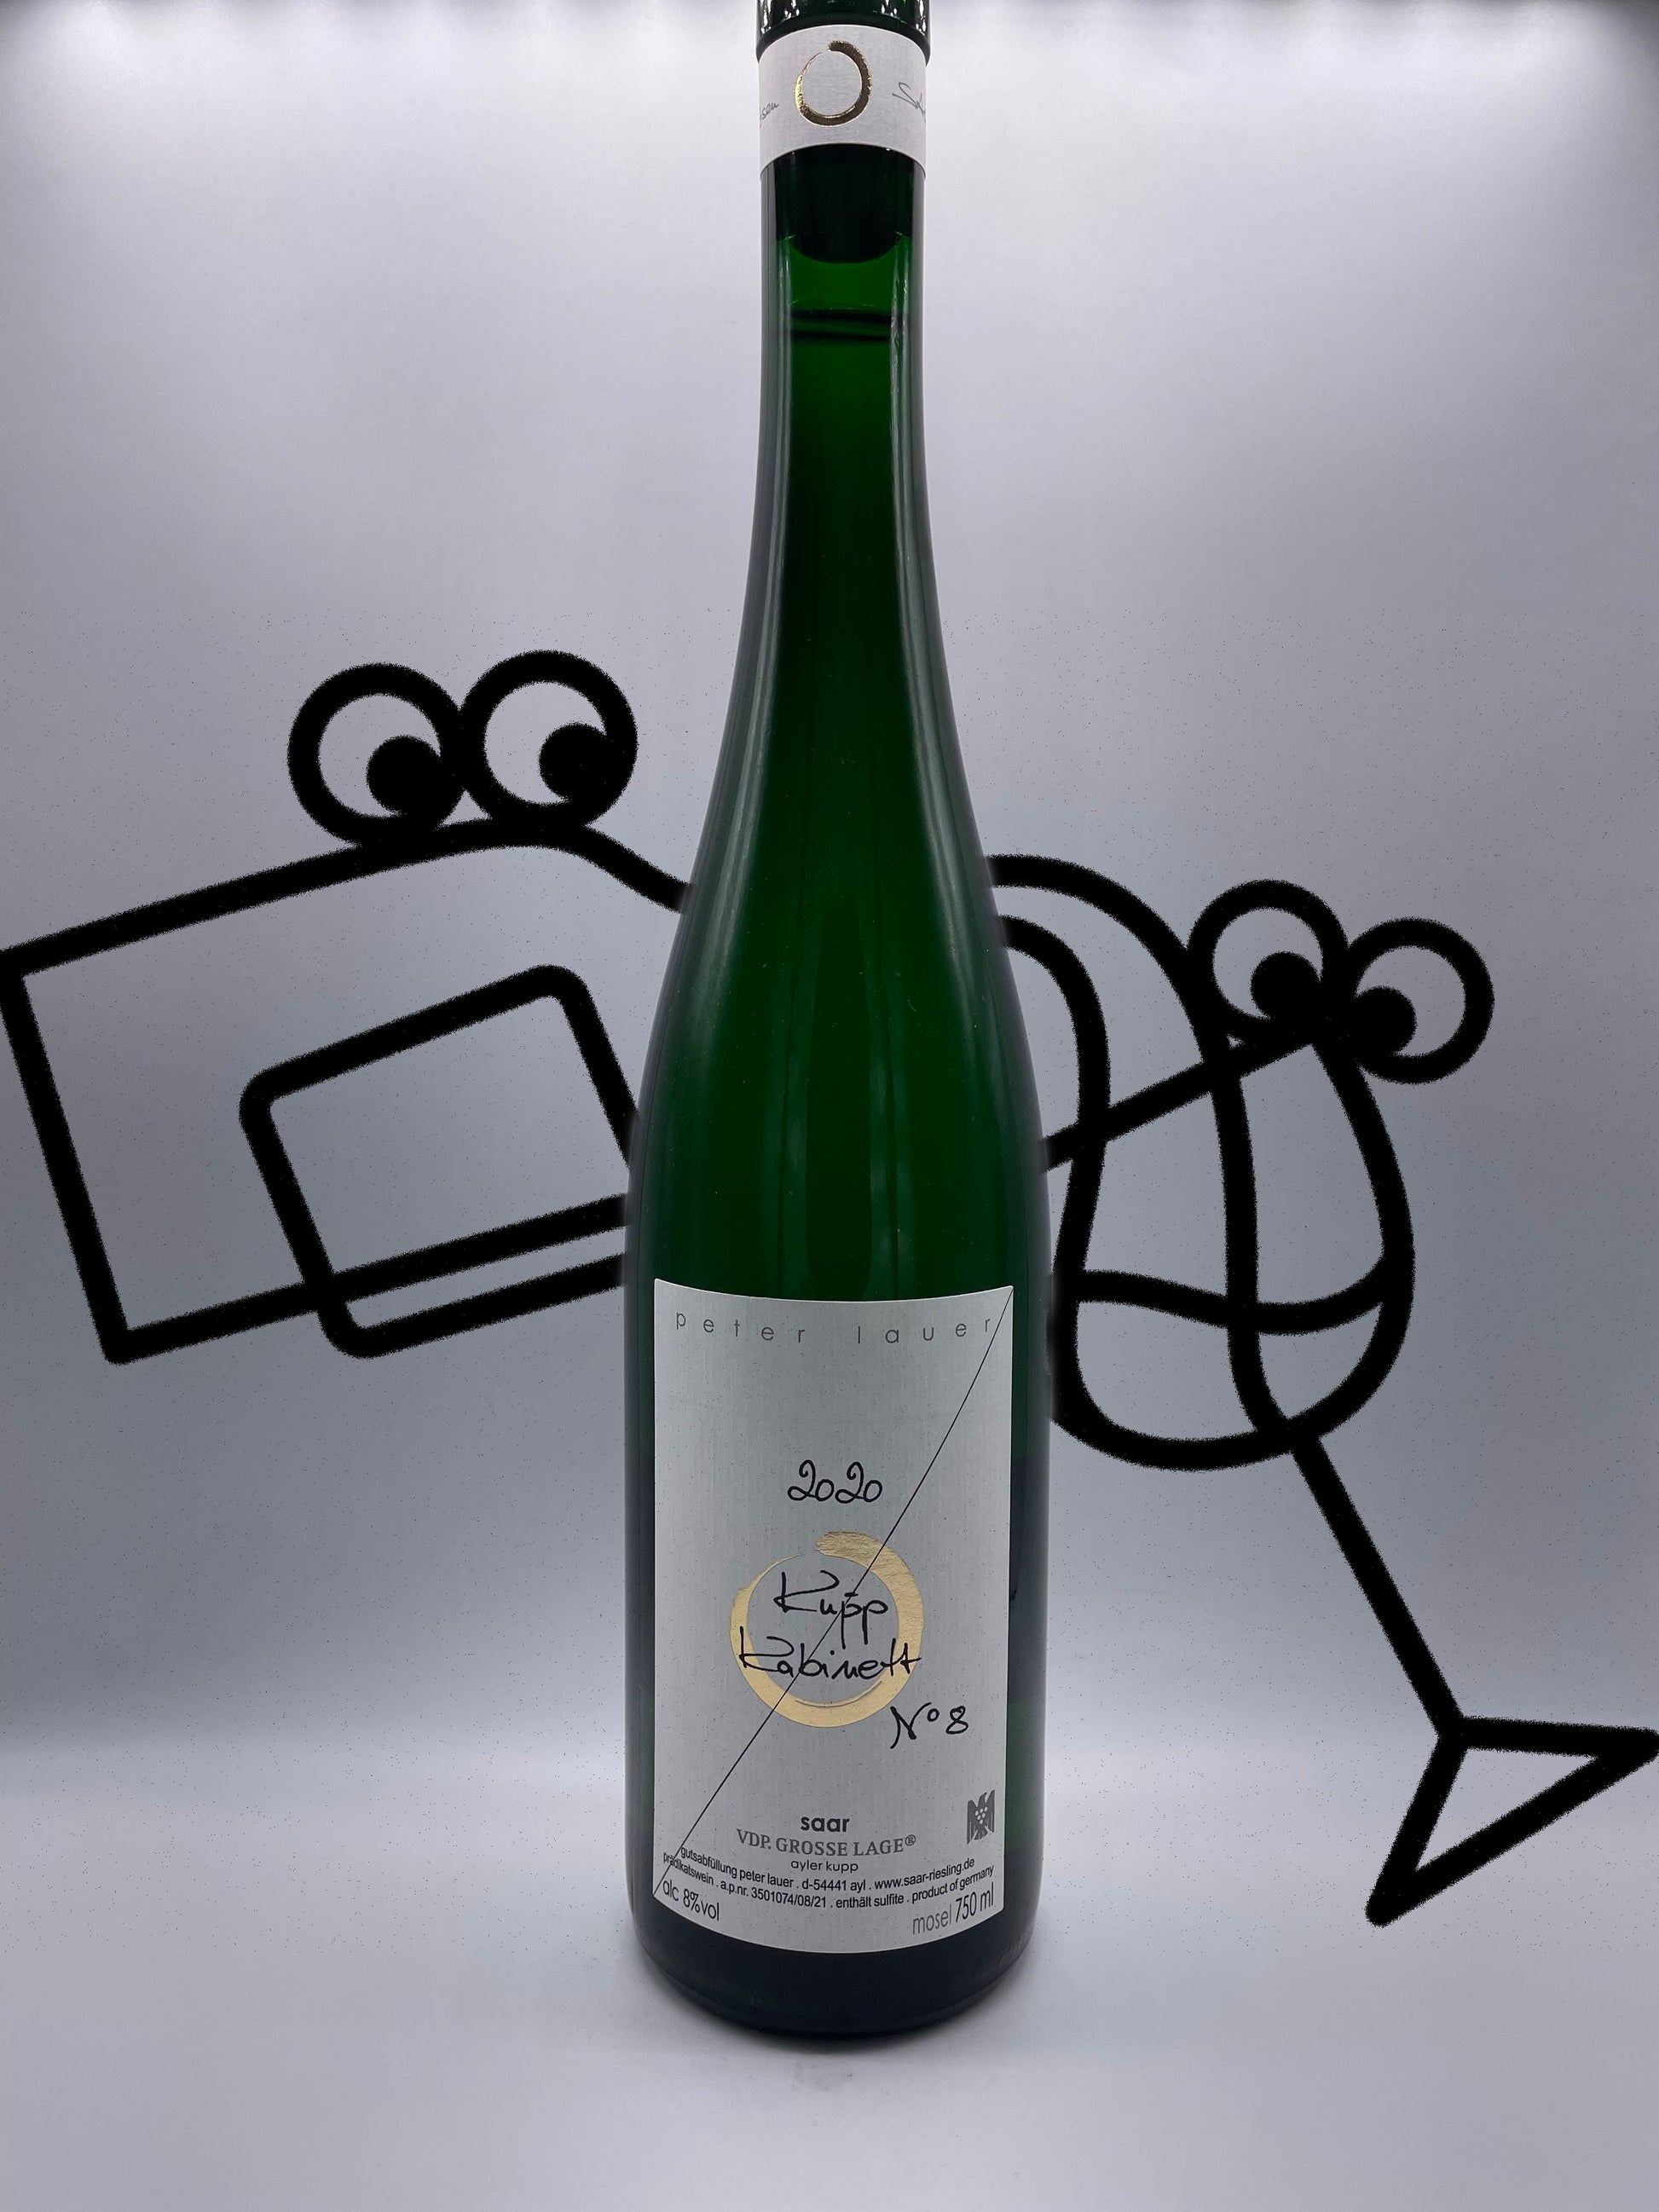 Lauer 'Ayler Kupp' Kabinett Fass 8 2020 Saar, Mosel, Germany Williston Park Wines